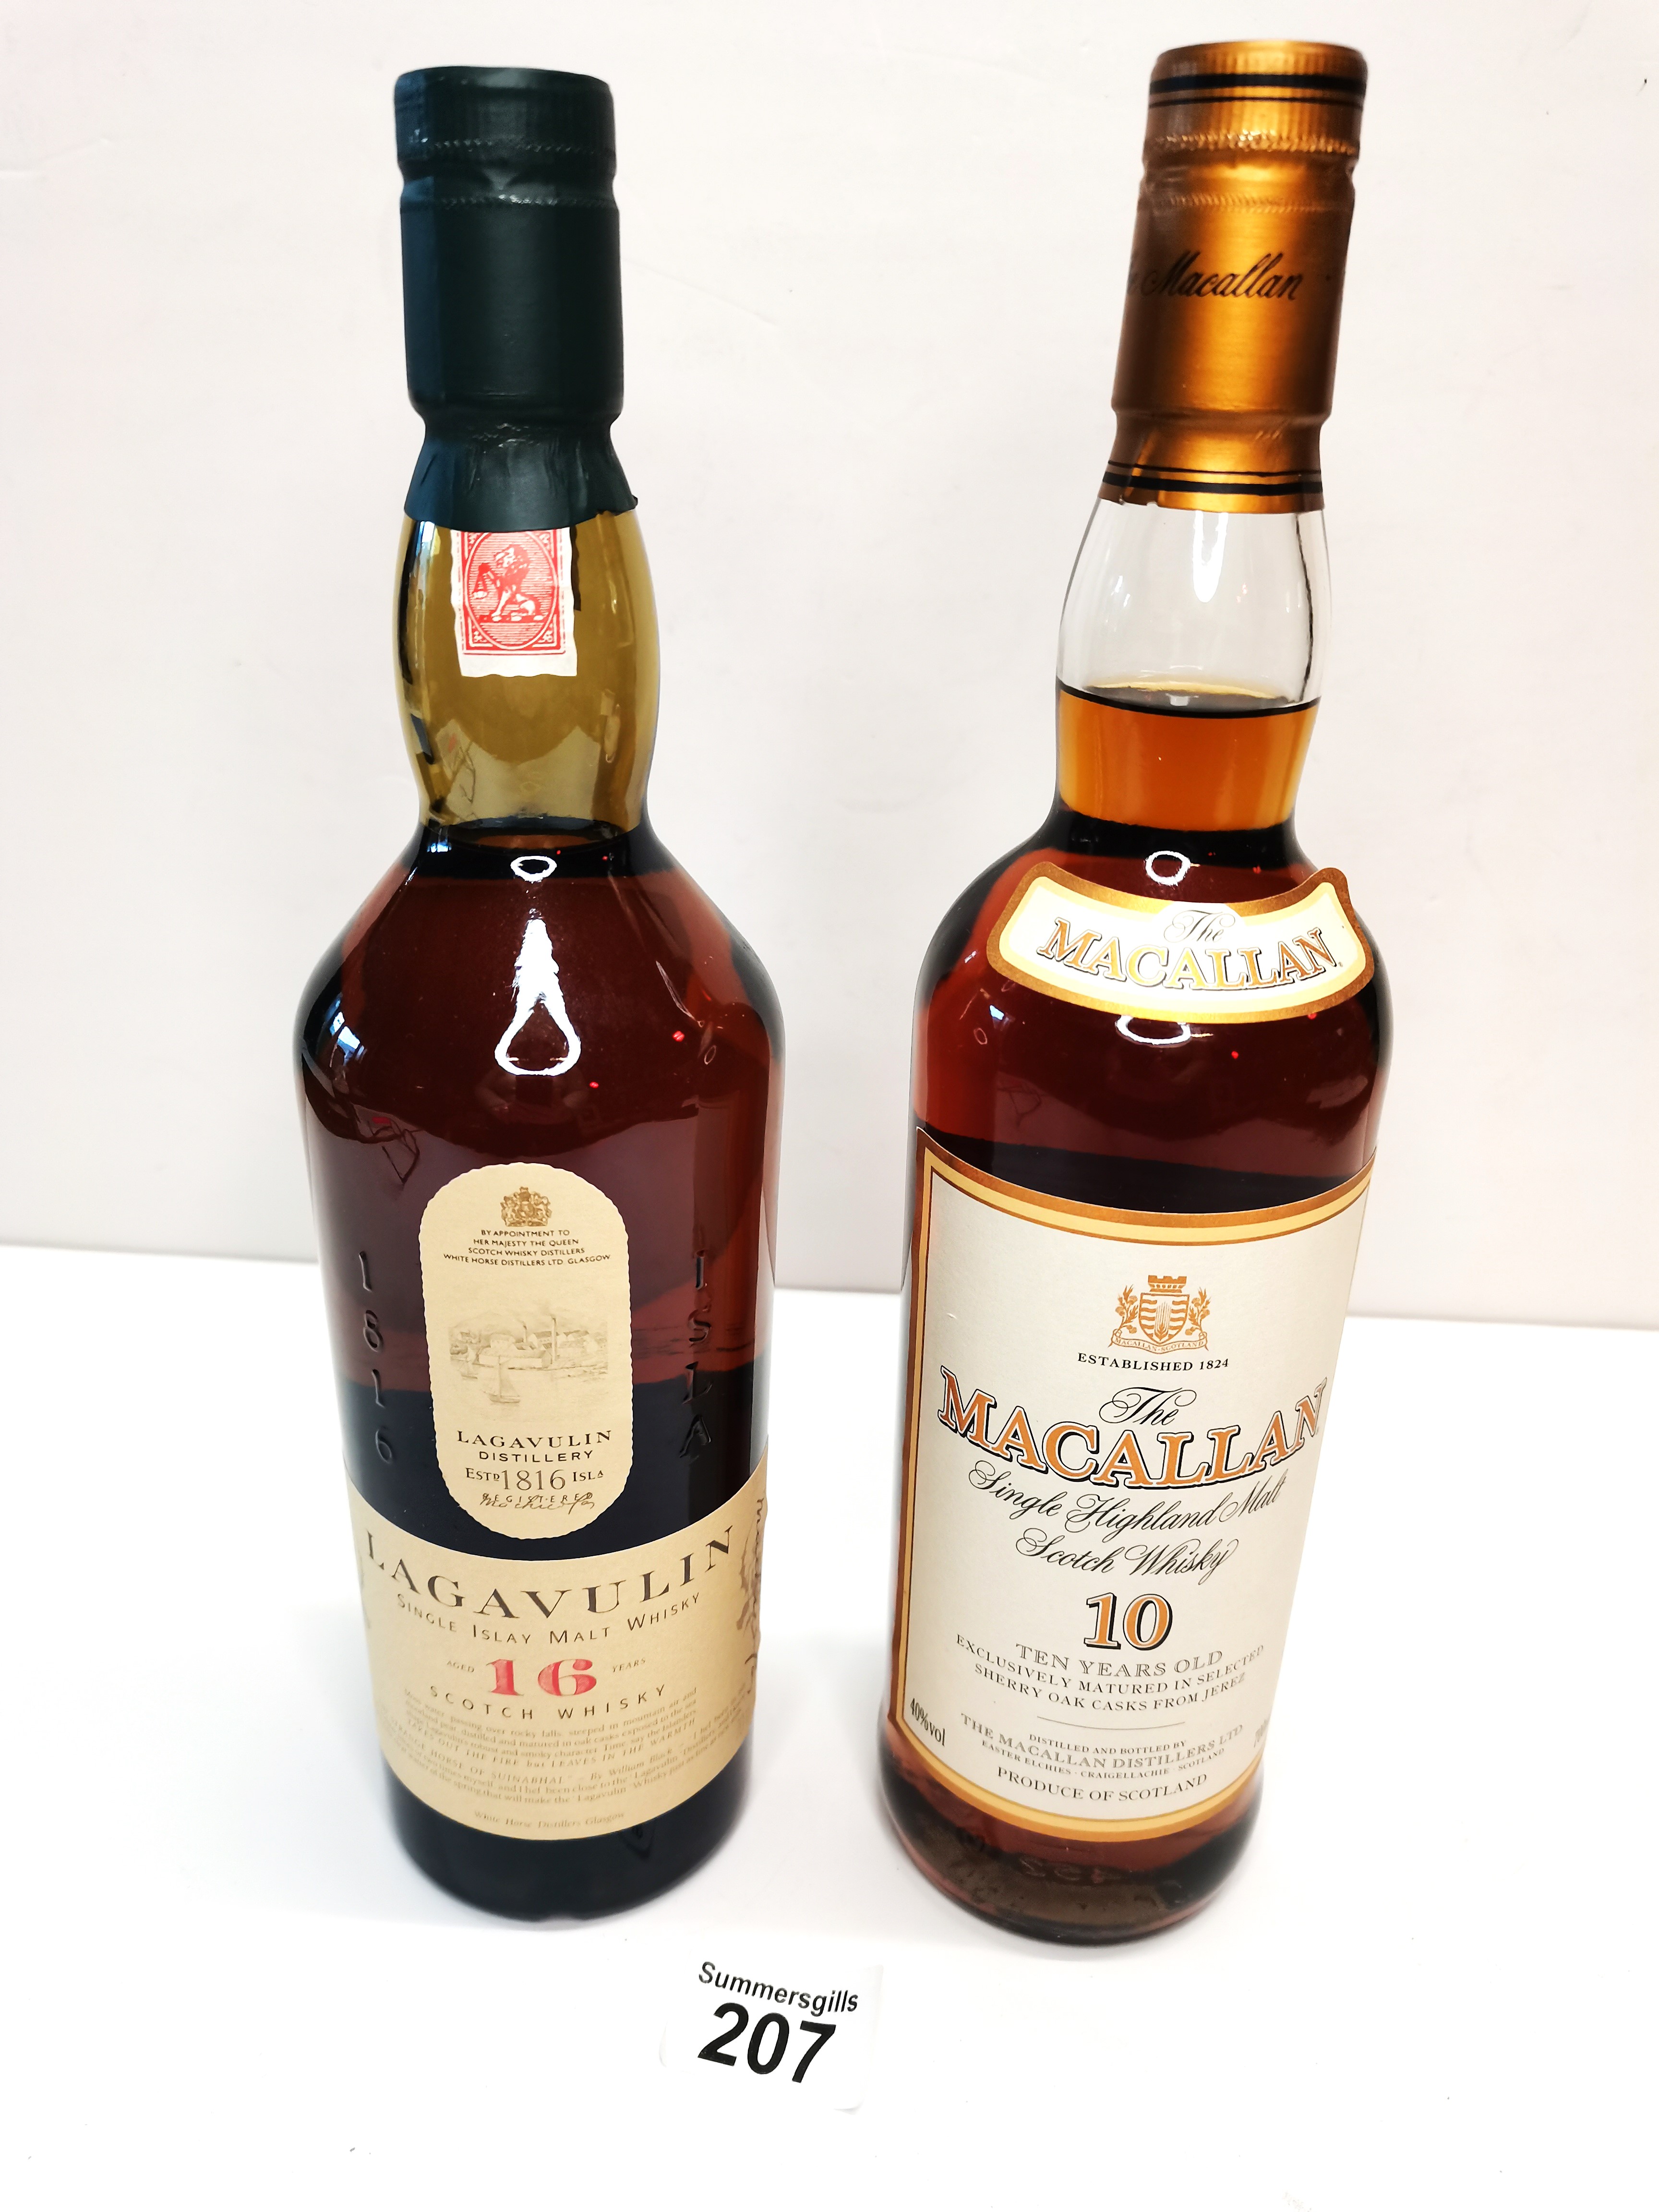 A bottle of Macallan Single Highland Malt Scotch Whisky - 10 year old